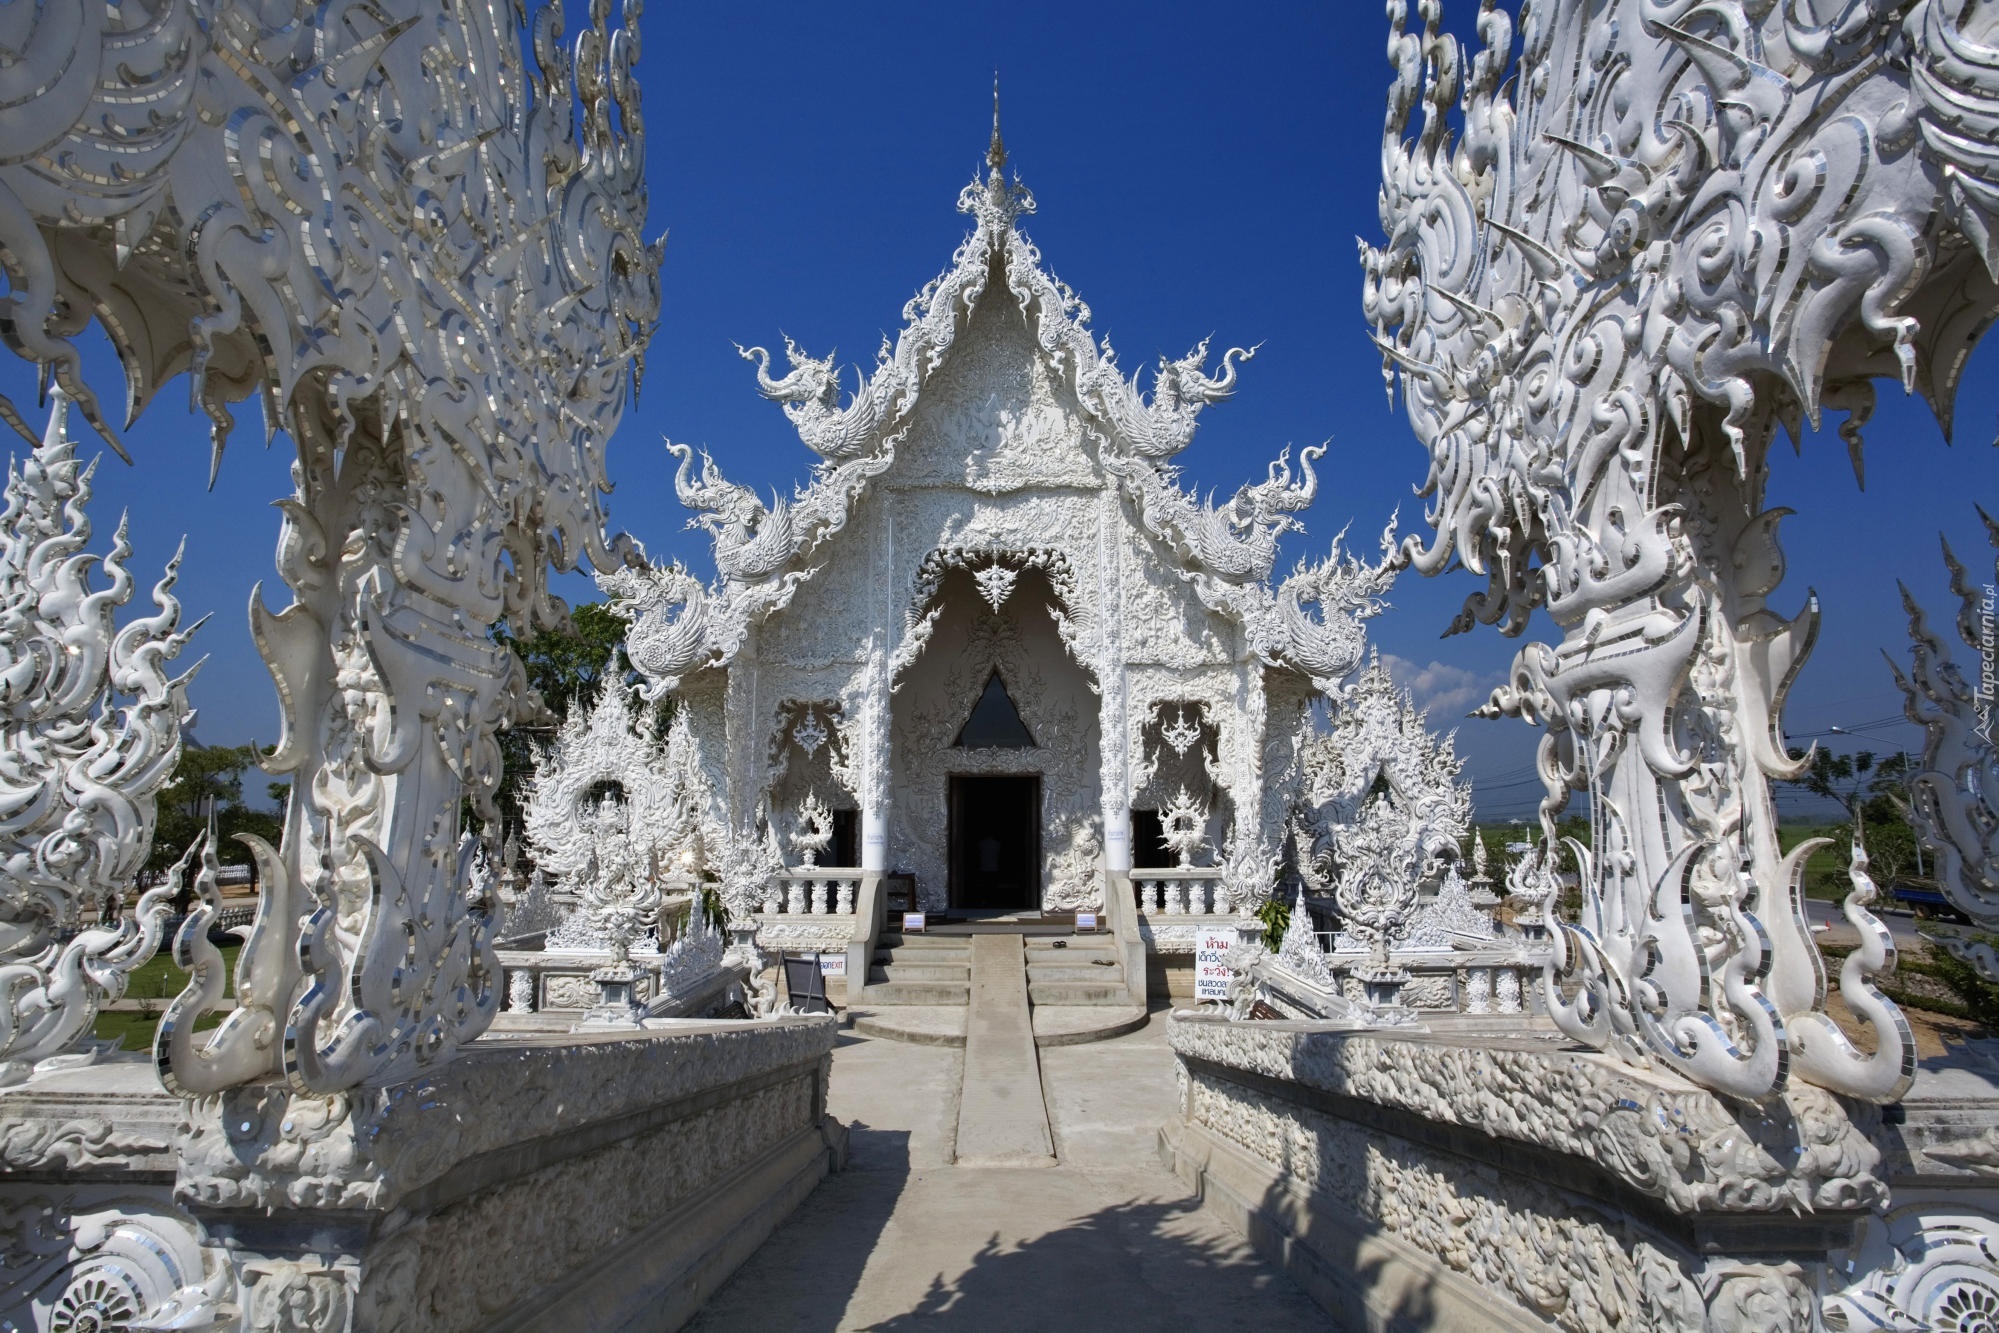 Biała Świątynia, Buddyjska, Wat Rong Khun, Prowincja Chiang Rai, Tajlandia